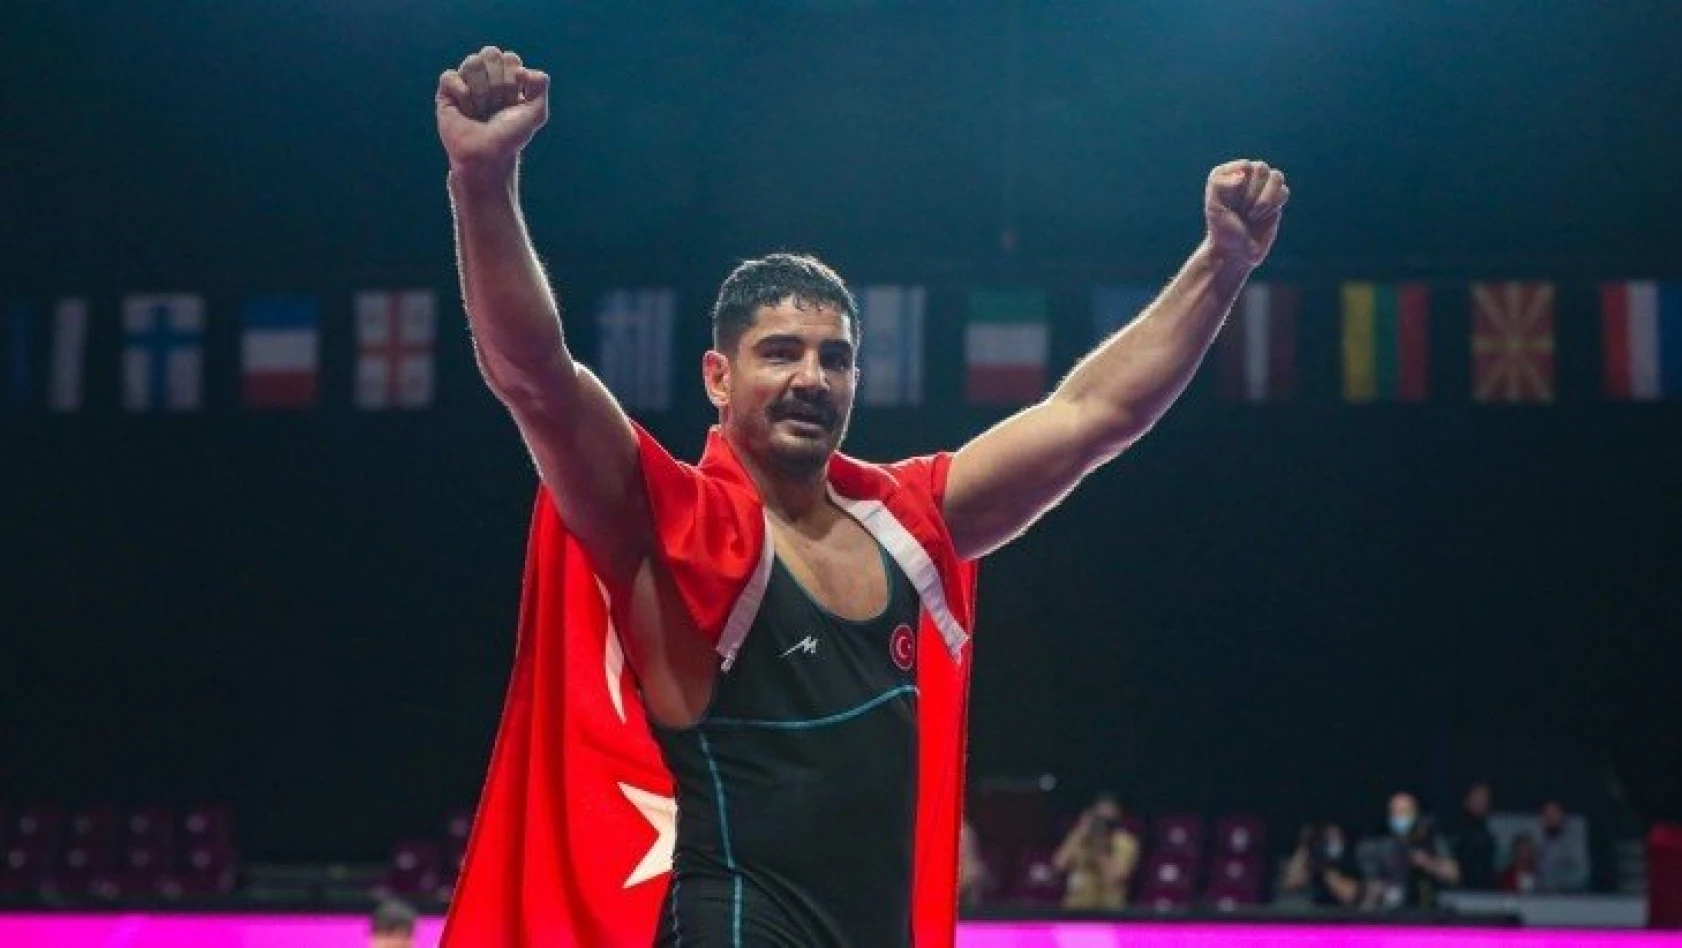 Taha Akgül 8. kez Avrupa şampiyonu oldu